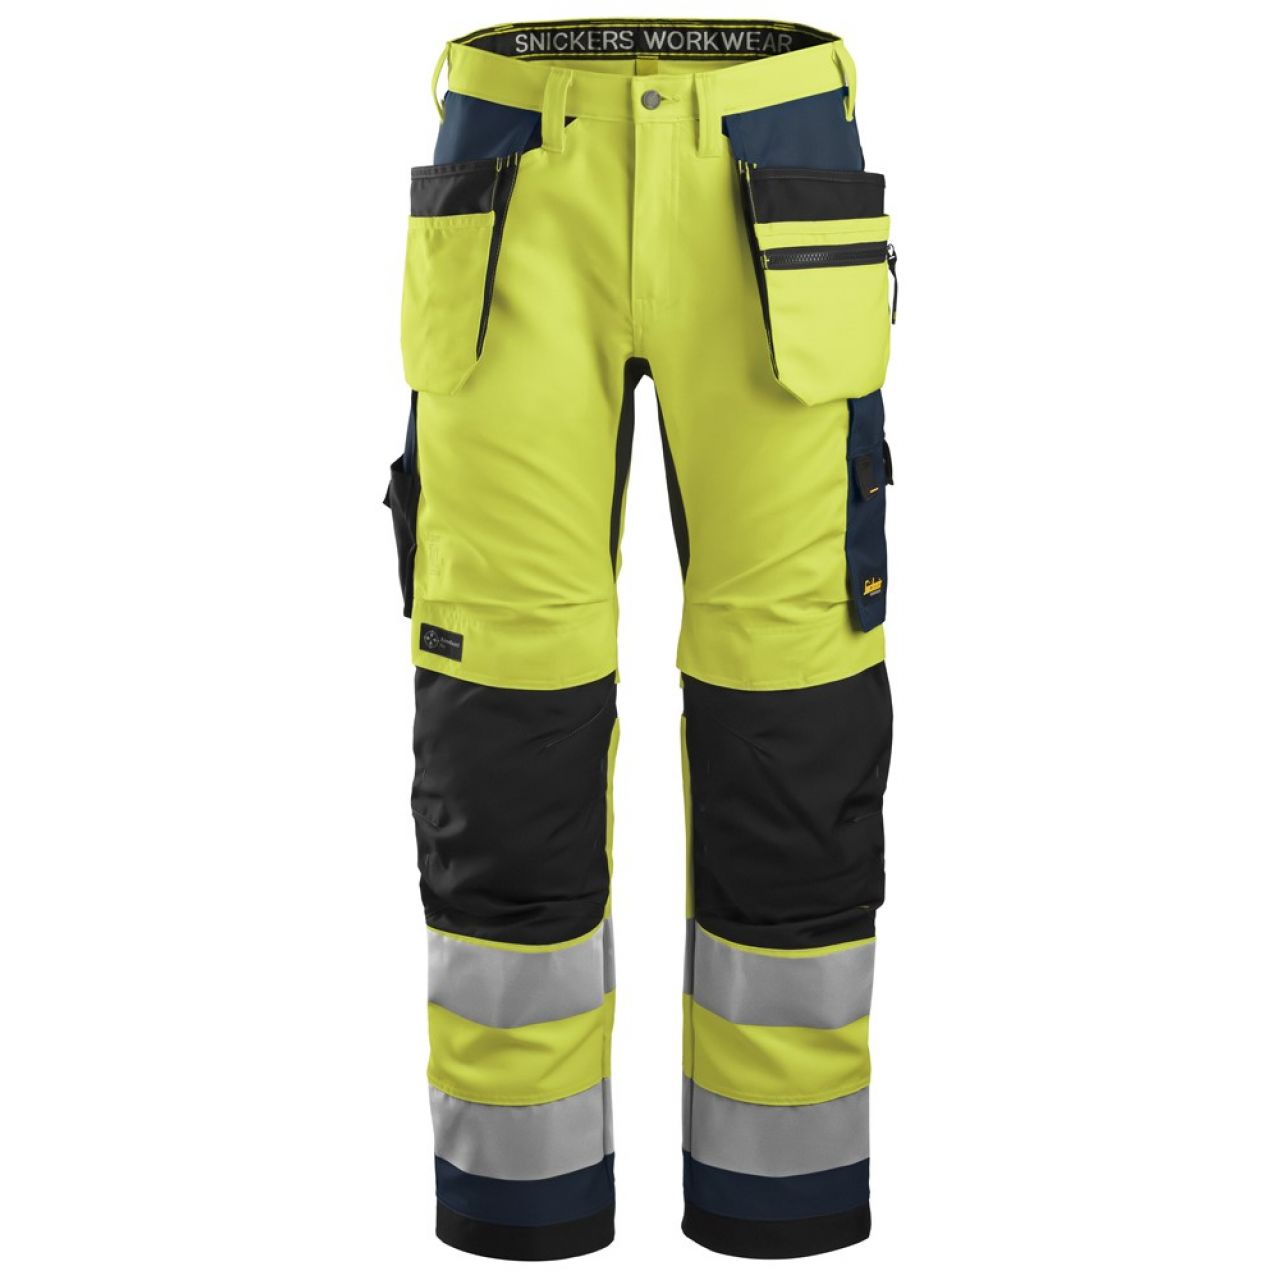 6230 Pantalones largos de trabajo de alta visibilidad clase 2 con bolsillos flotantes AllroundWork amarillo-azul marino talla 104